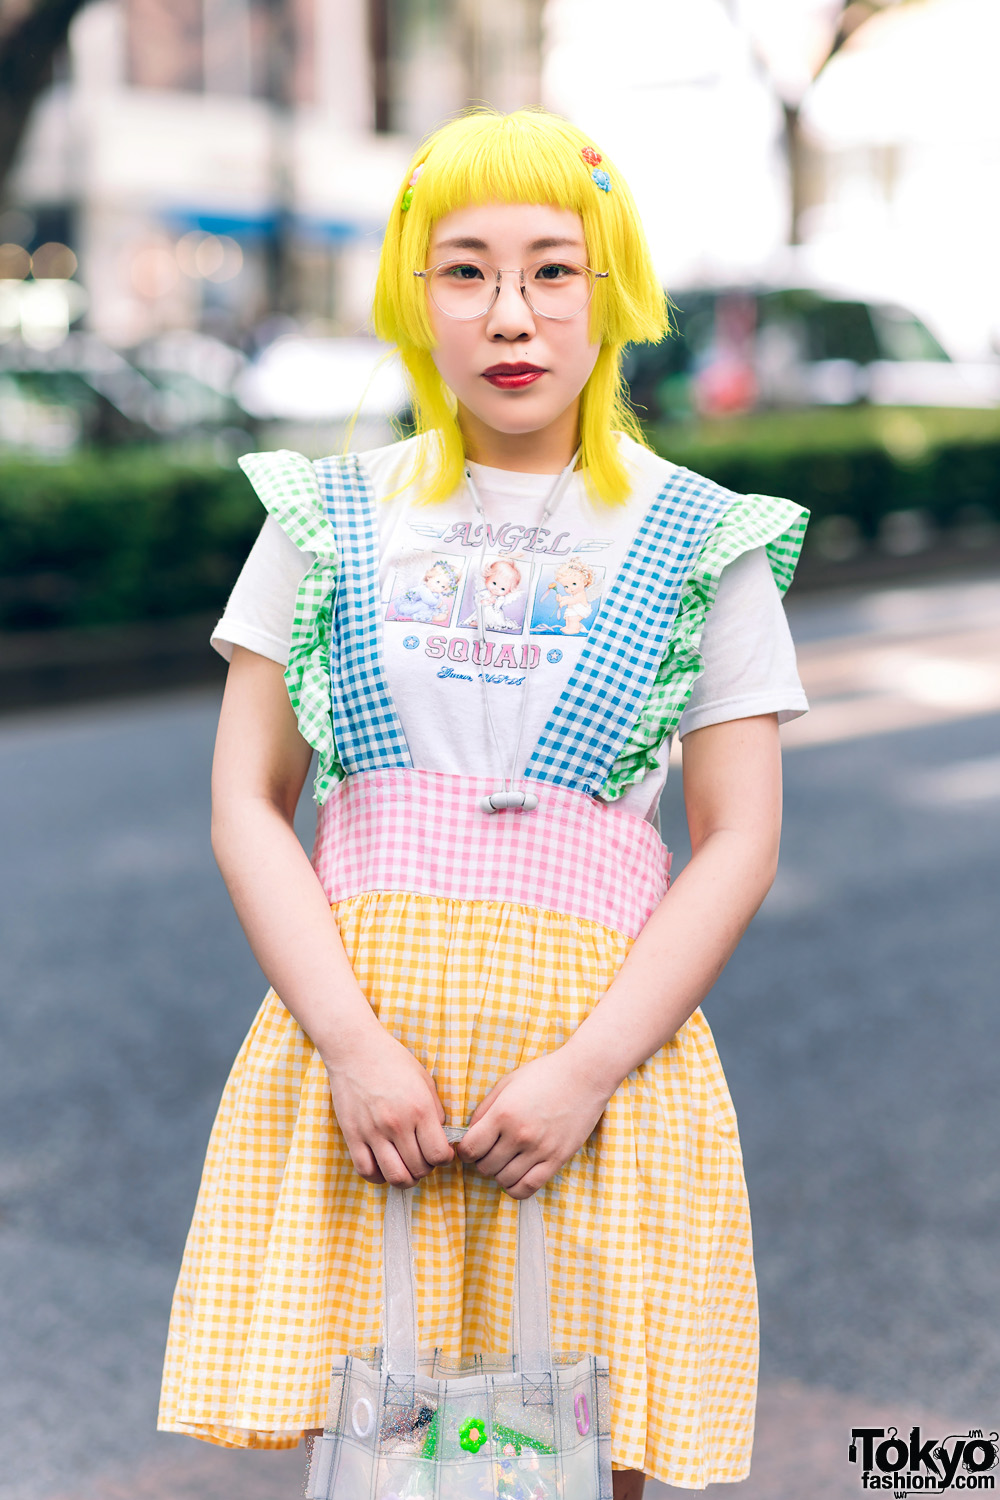 Colorful Harajuku Style W Yellow Hair Angel Squad T Shirt Handmade